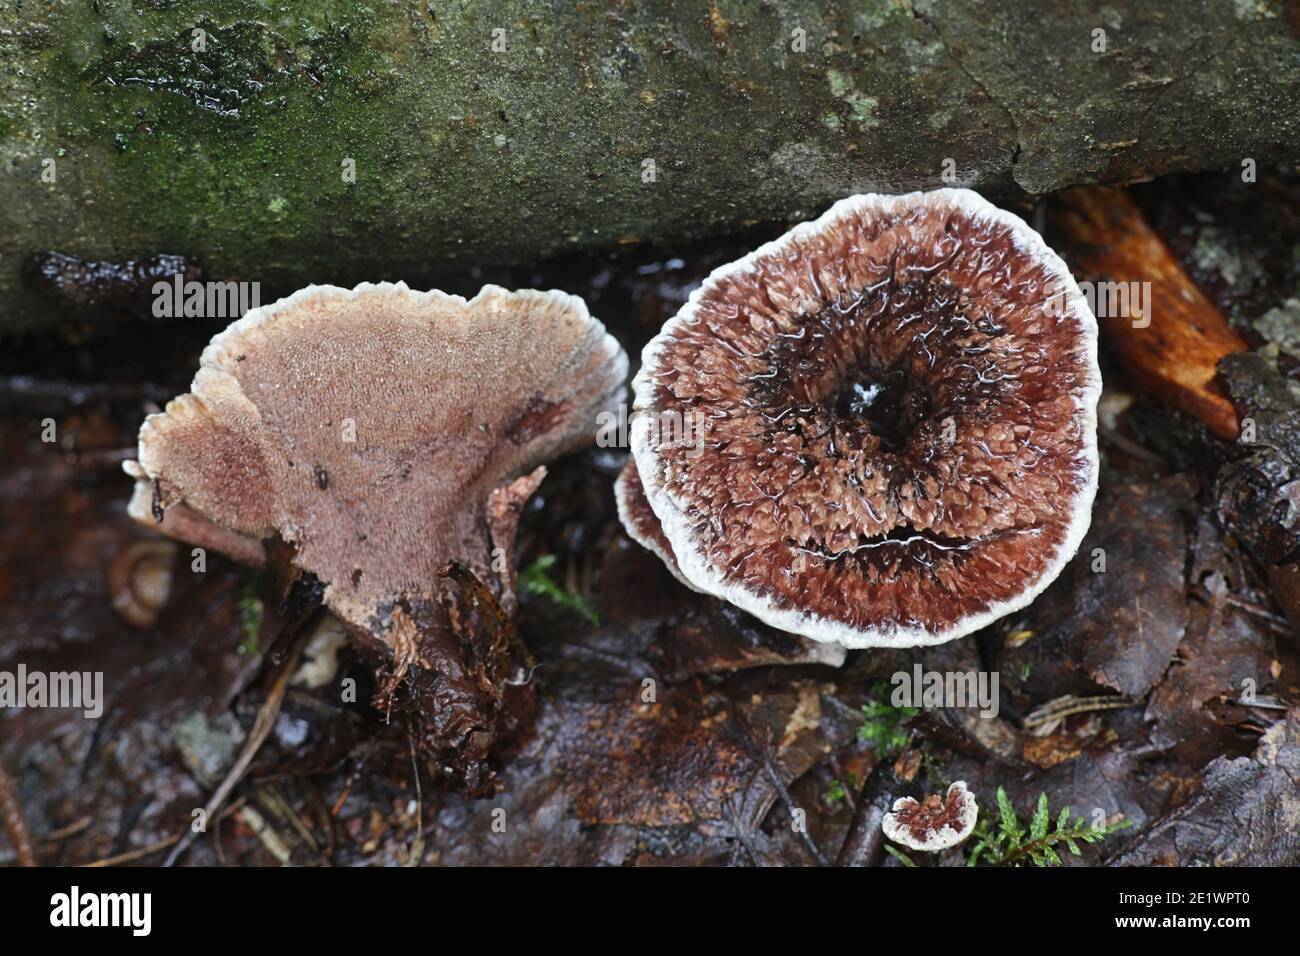 Hydnellum concrescens, also called Hydnum zonatum, the zoned tooth fungus, wild mushroom from Finland Stock Photo